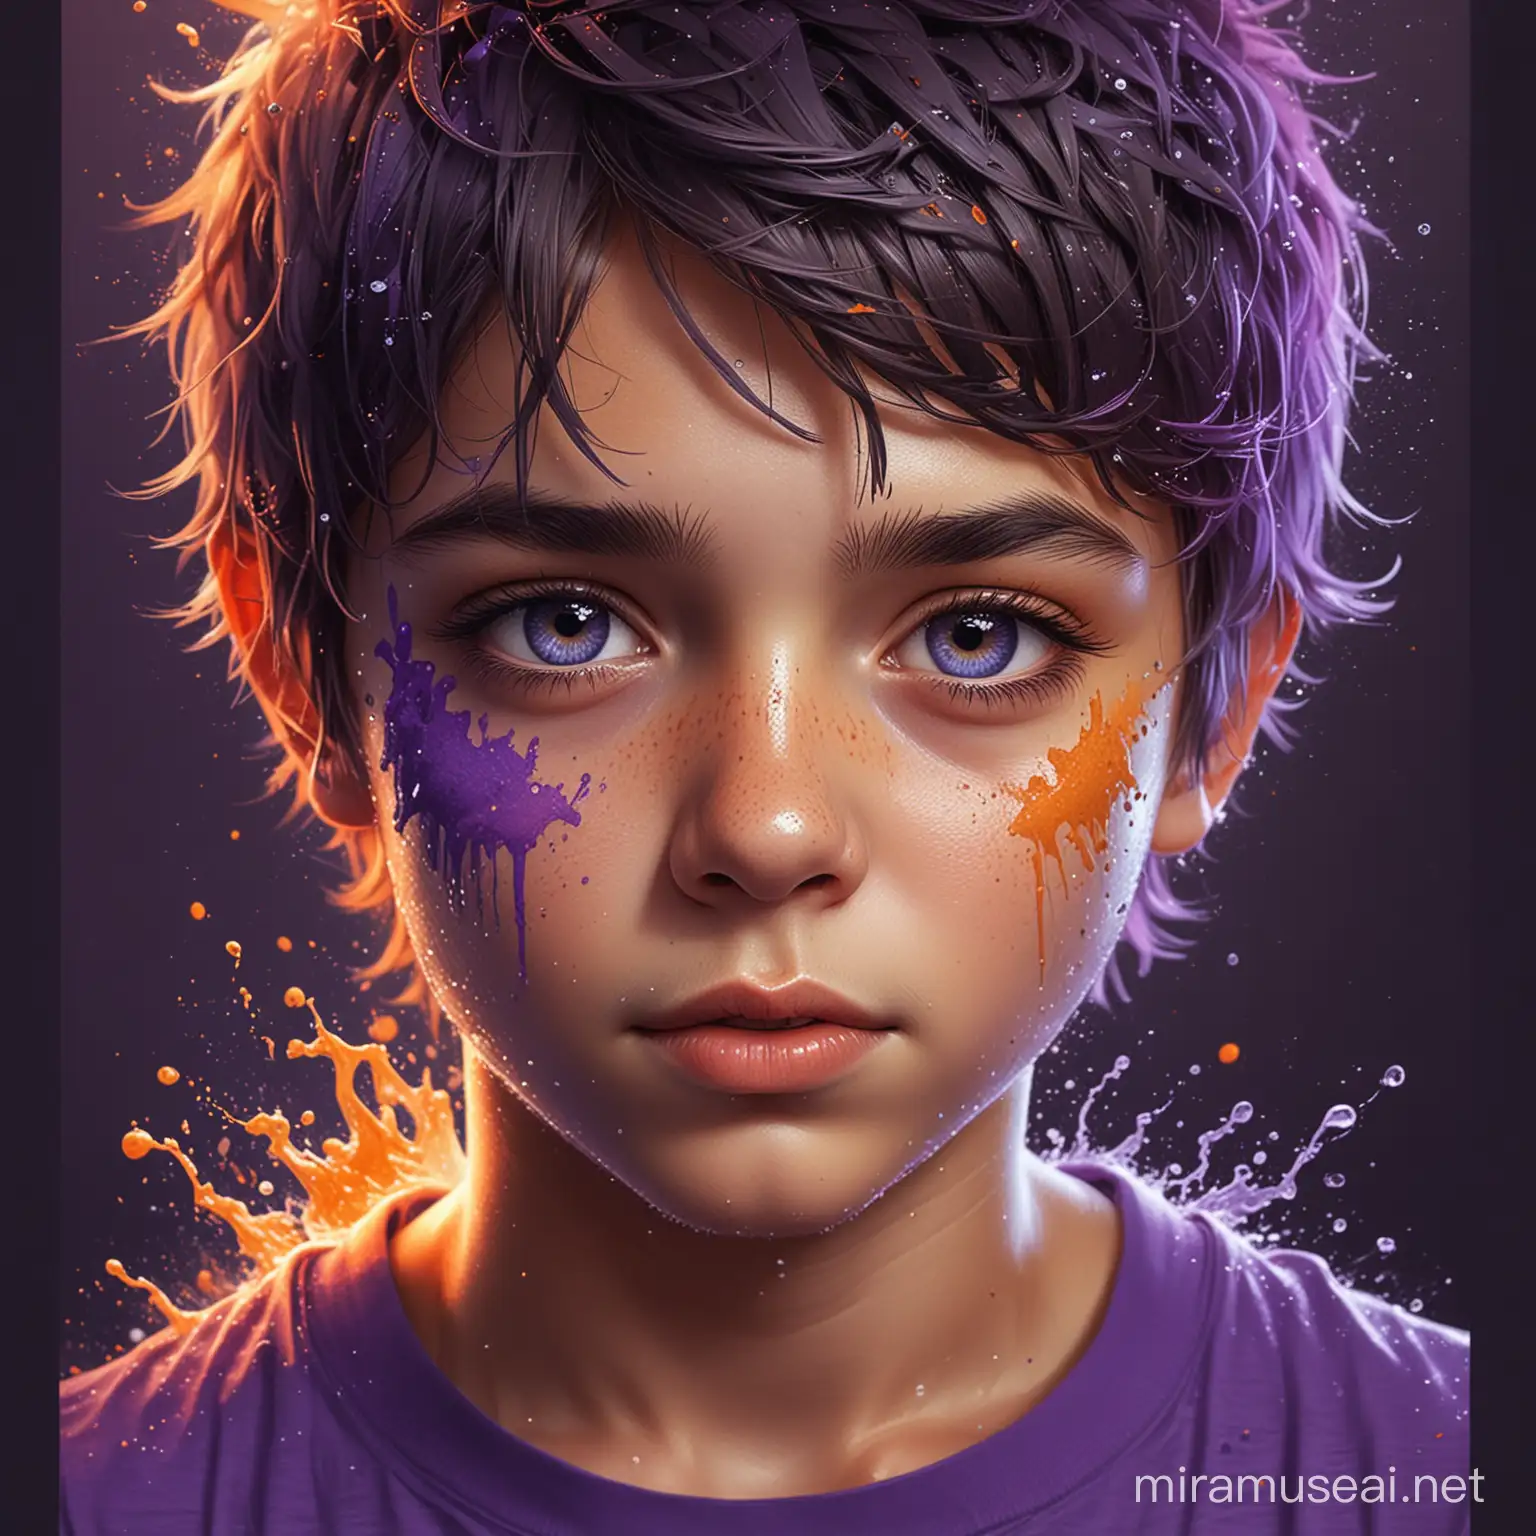 (a cute boy), Hyperdetailed Eyes, Tee-Shirt Design, Line Art, vibrant dark orange and purple gradient, Ultra Detailed Artistic, Detailed Gorgeous Face, Natural Skin, Water Splash, Color Splash Art, Fire and Ice, Splatter